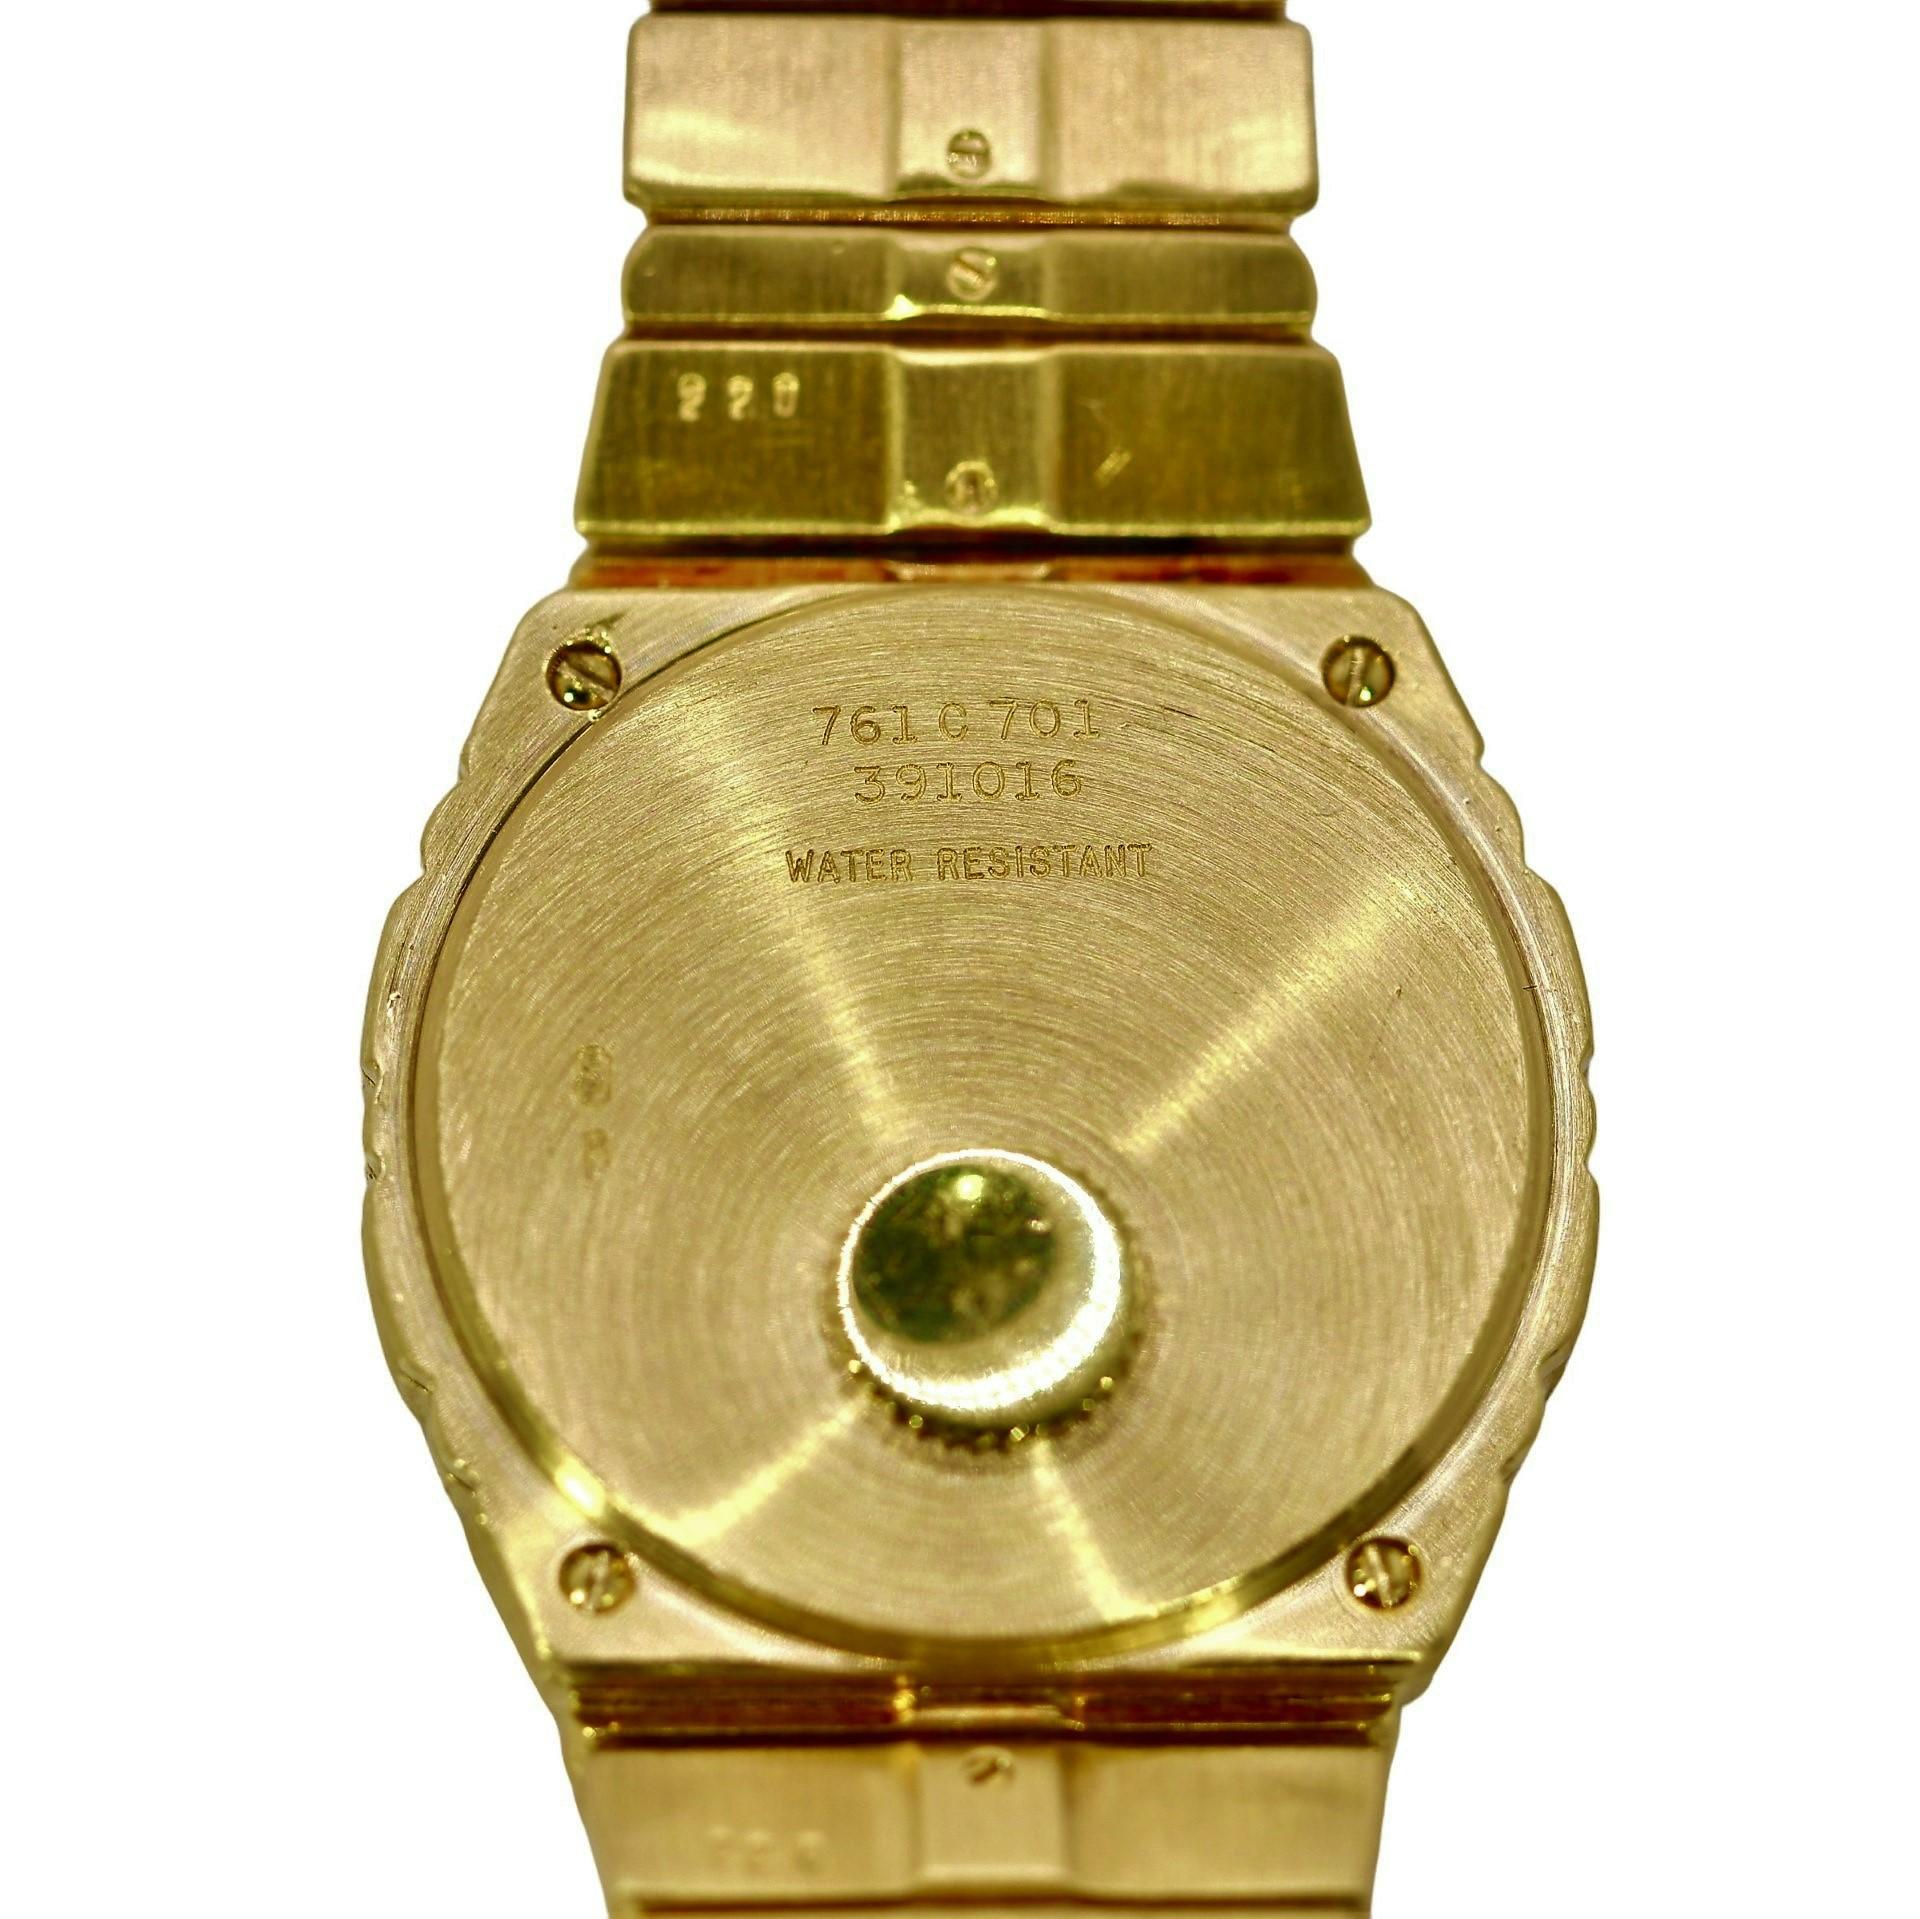 Modern Classic Mid-size Piaget Polo Wrist Watch with Piaget Original Quartz Movement